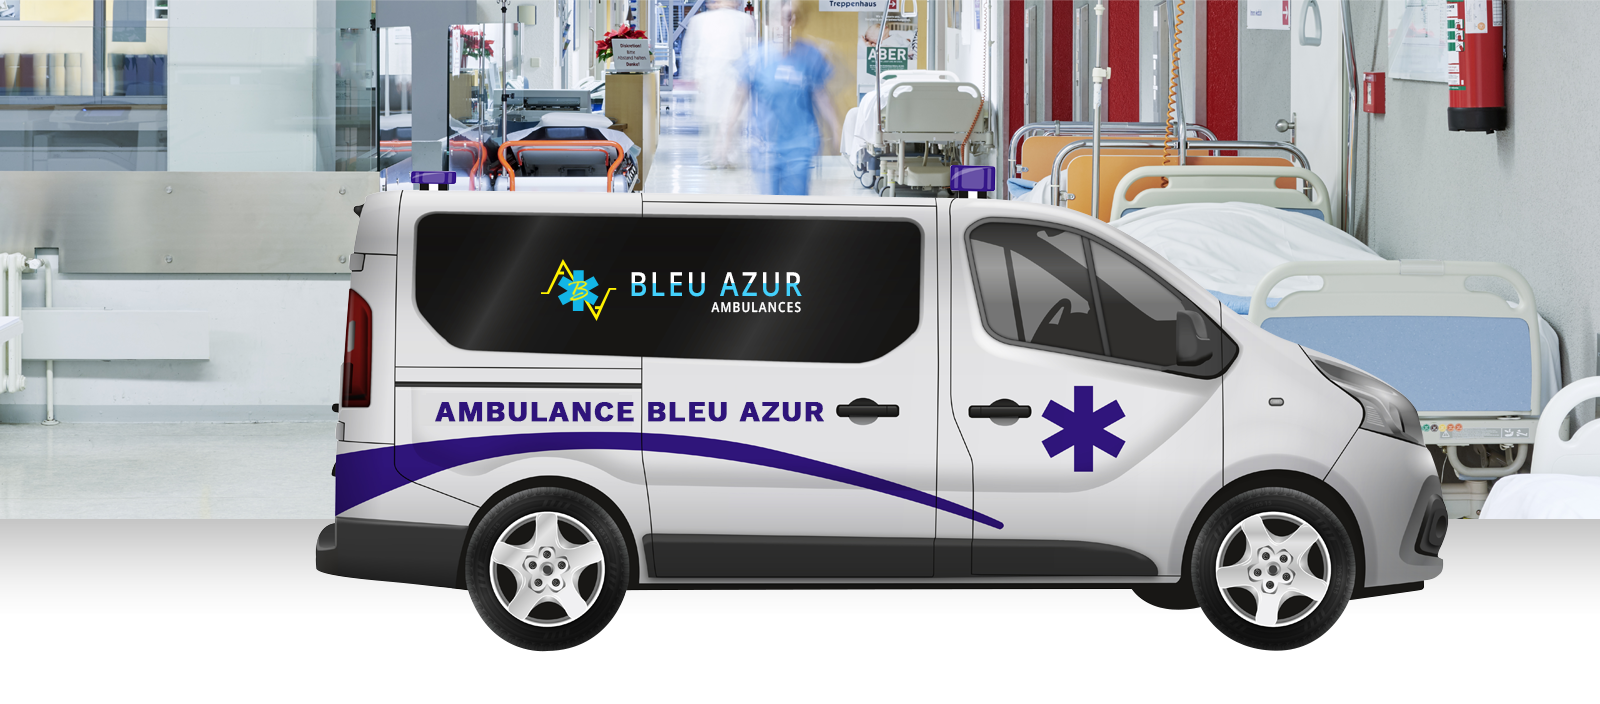 Ambulances Bleu Azur